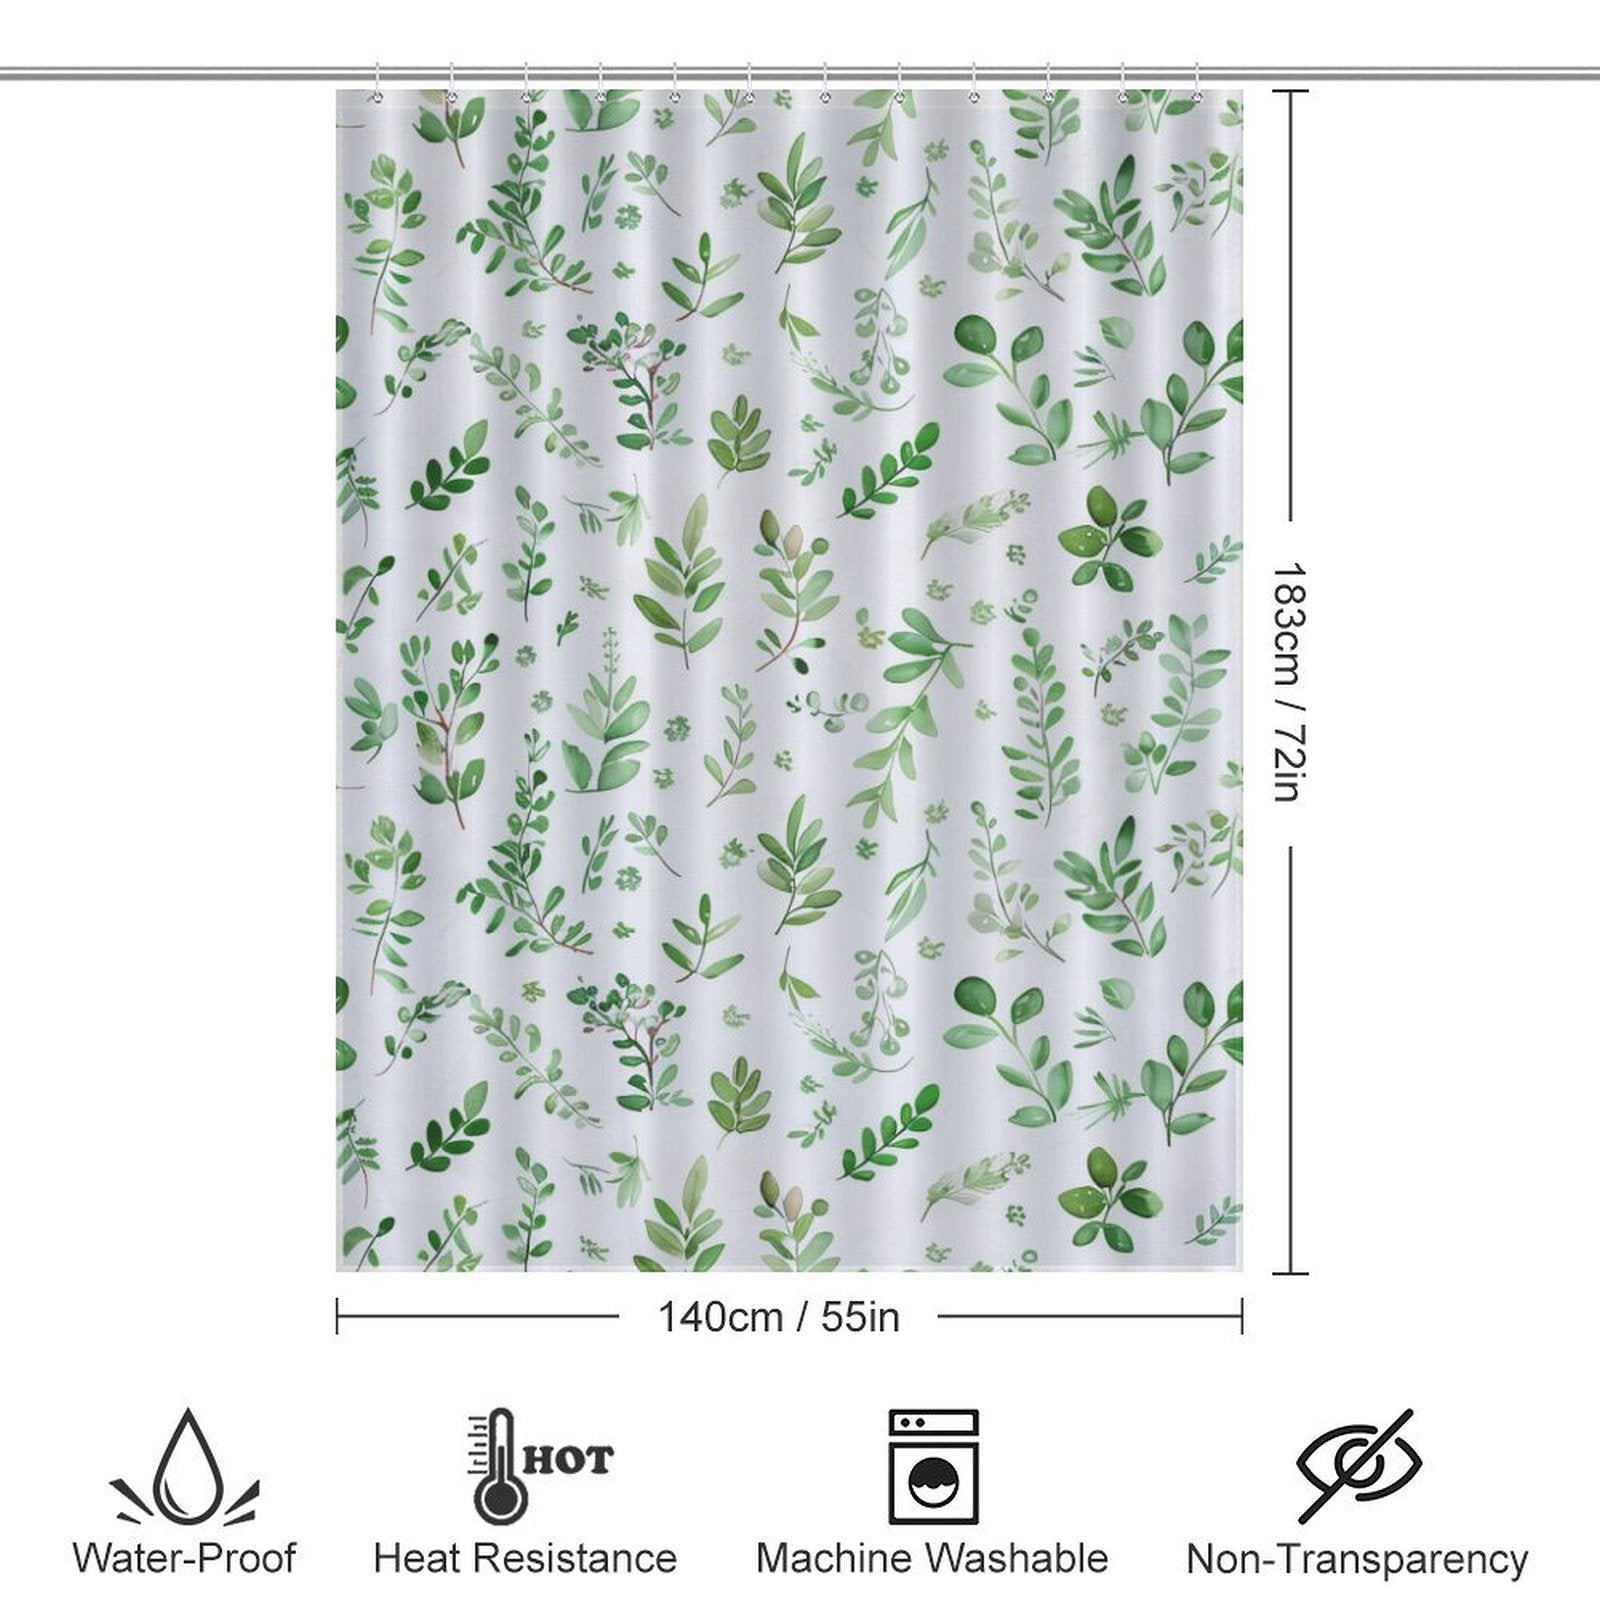 Minimalist Green Floral Boho Shower Curtain